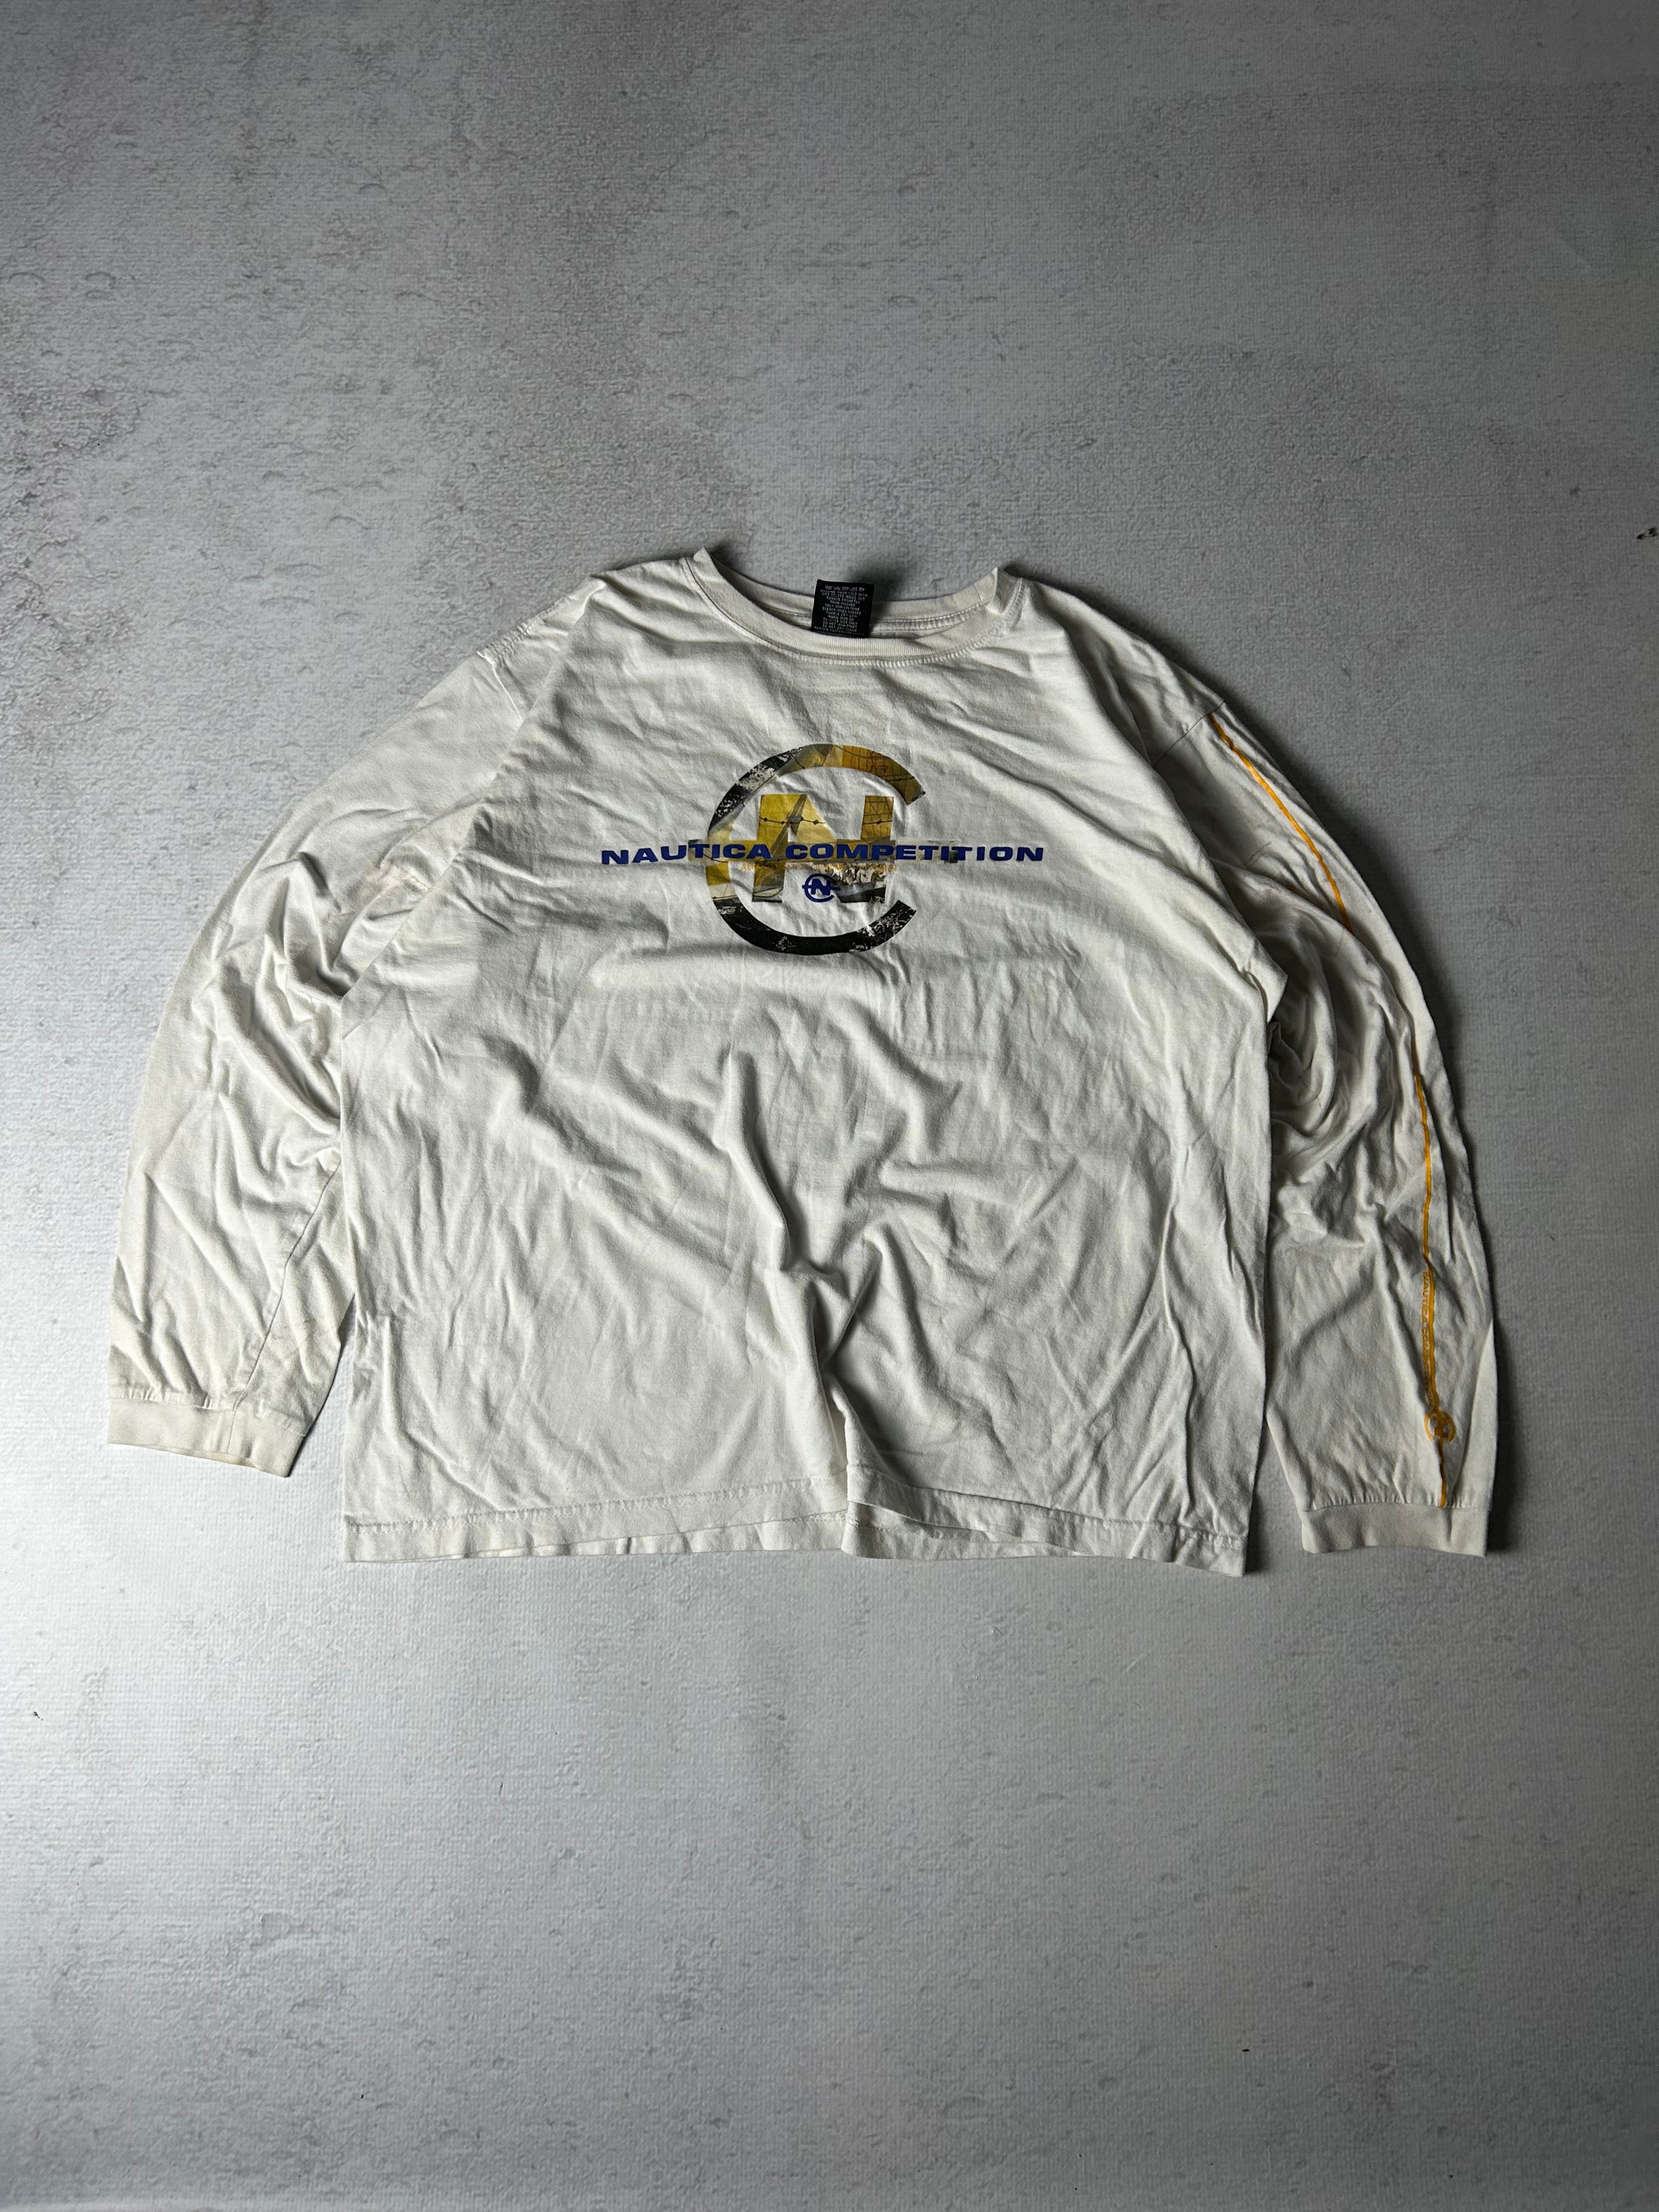 Vintage Nautica Competition Long-Sleeve T-Shirt - Men's Large